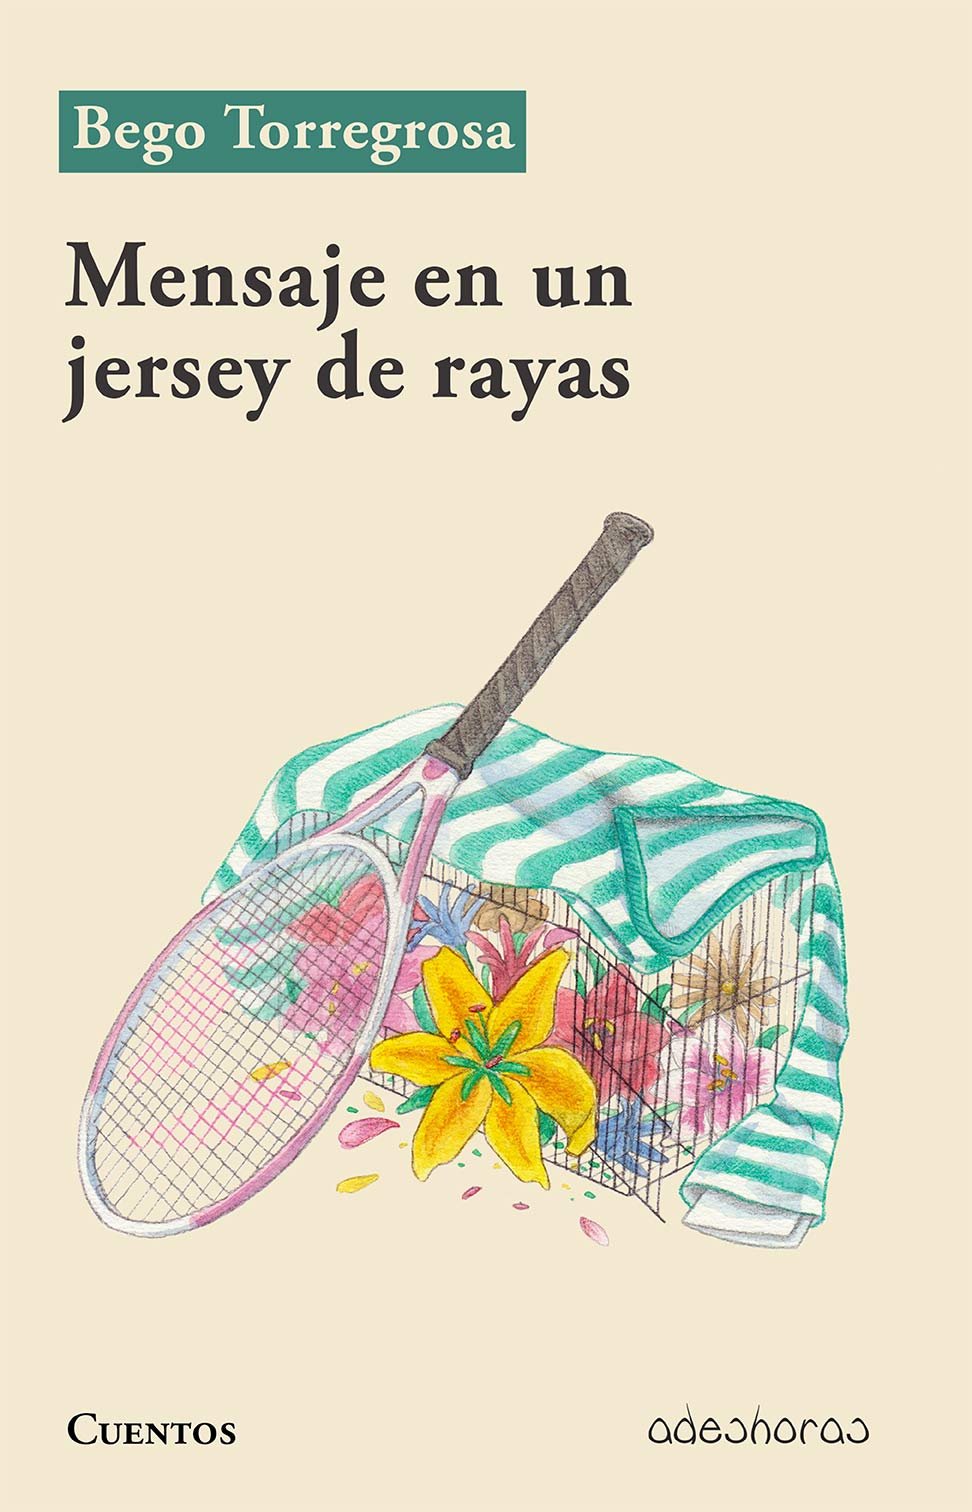 Portada de "Mensaje en un jersey a rayas", de Bego Torregrosa